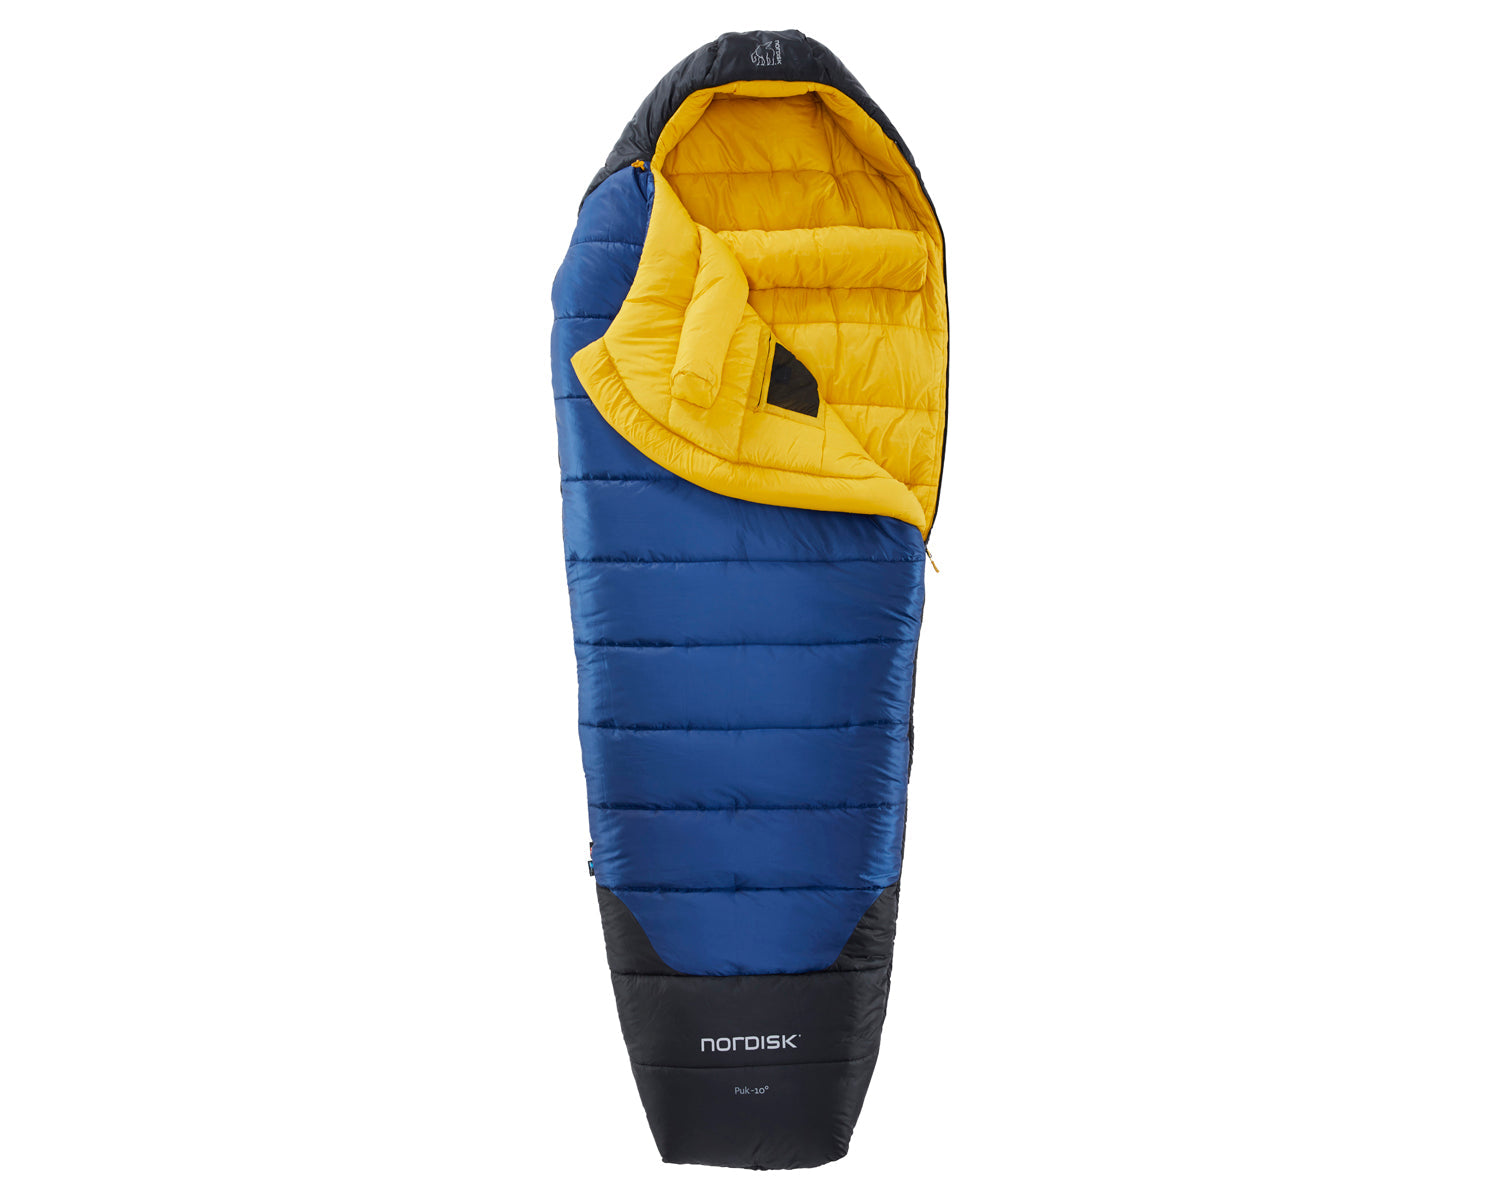 Puk -10° Mummy sleeping bag - True Navy/Mustard Yellow/Black